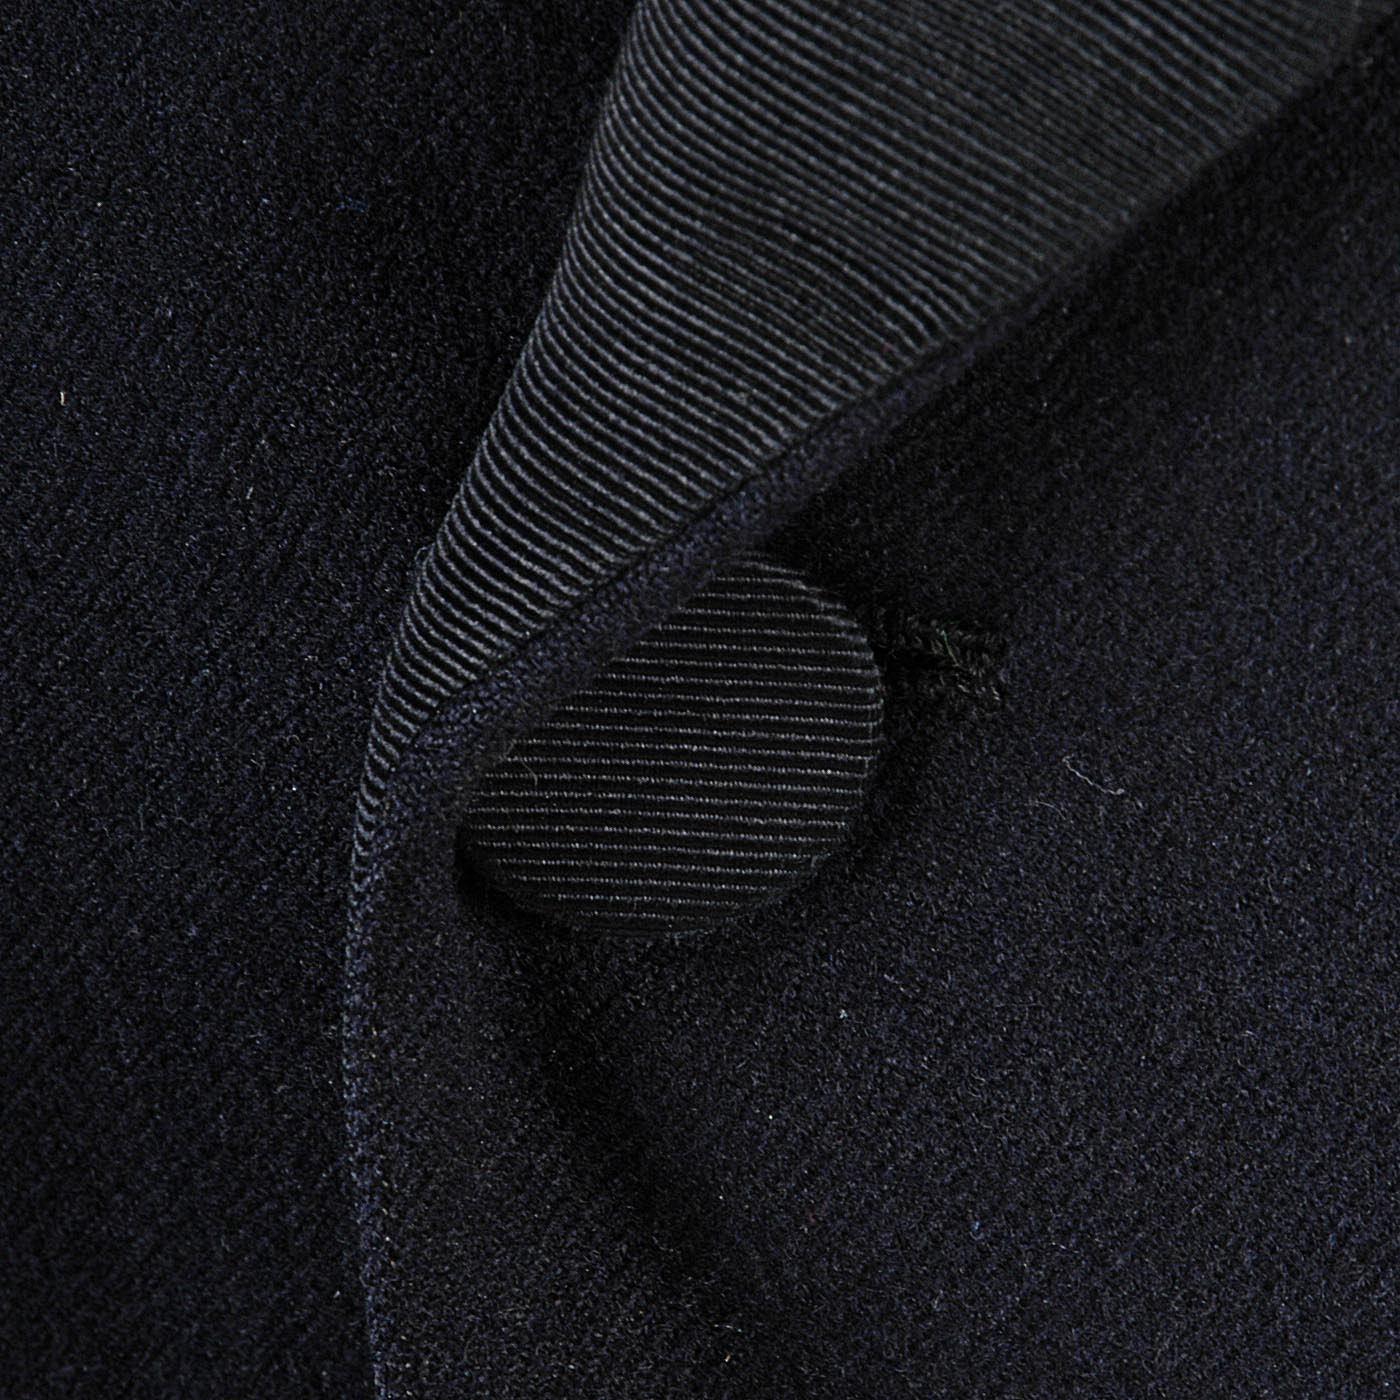 1930s Men's Navy Blue Peak Lapel Tuxedo Jacket